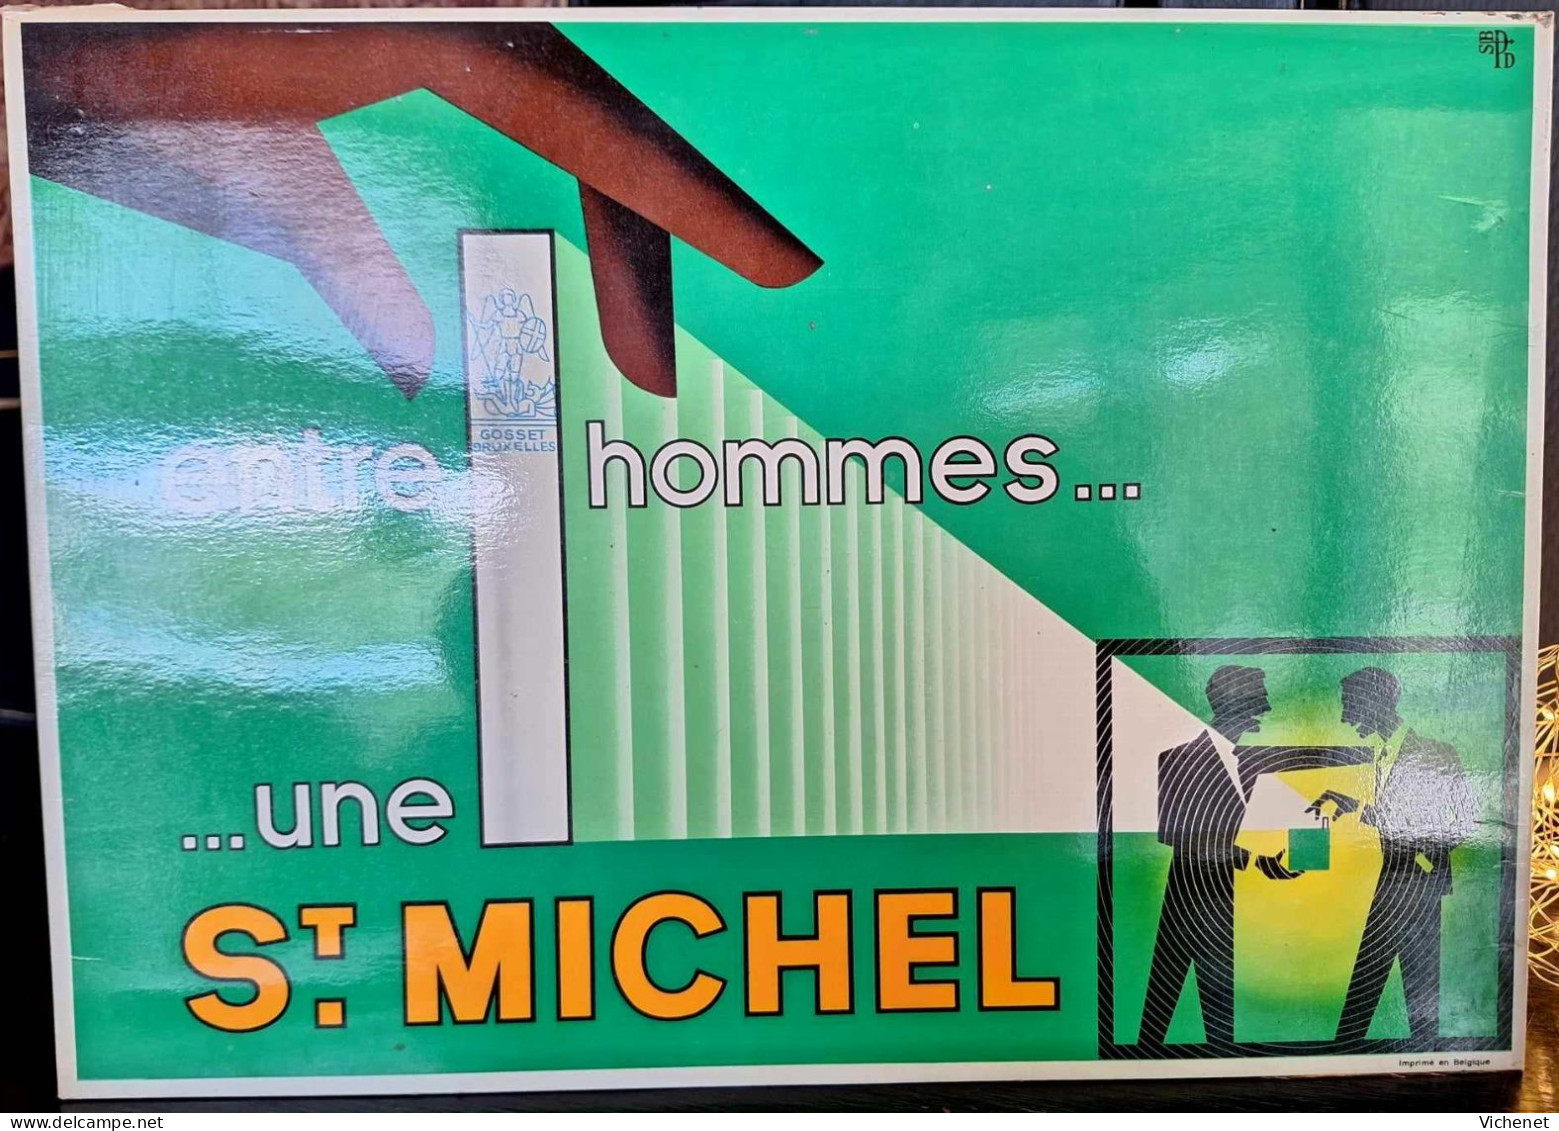 Cigarettes St Michel - Showcard - Objetos Publicitarios